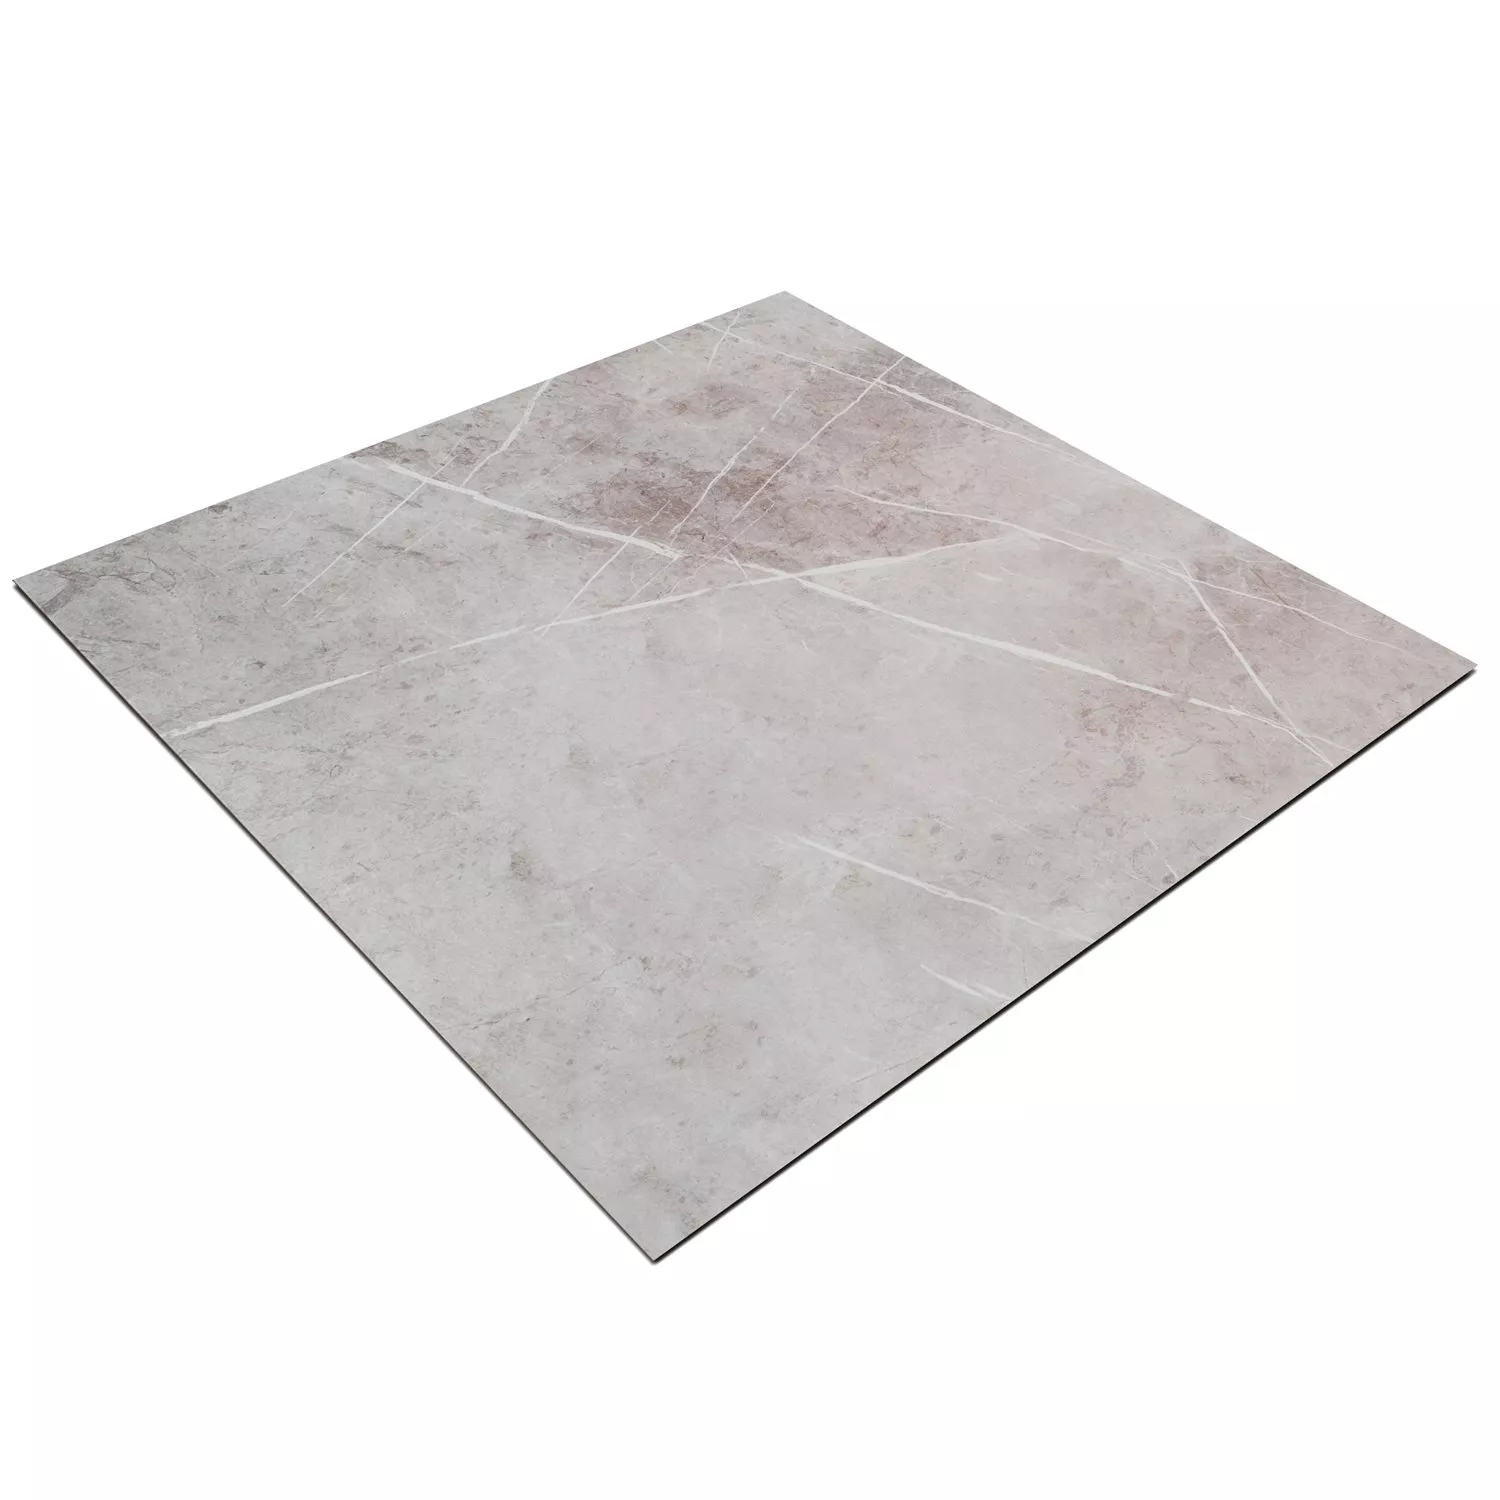 Sample Floor Tiles Comfort Grey Polished 58x58cm